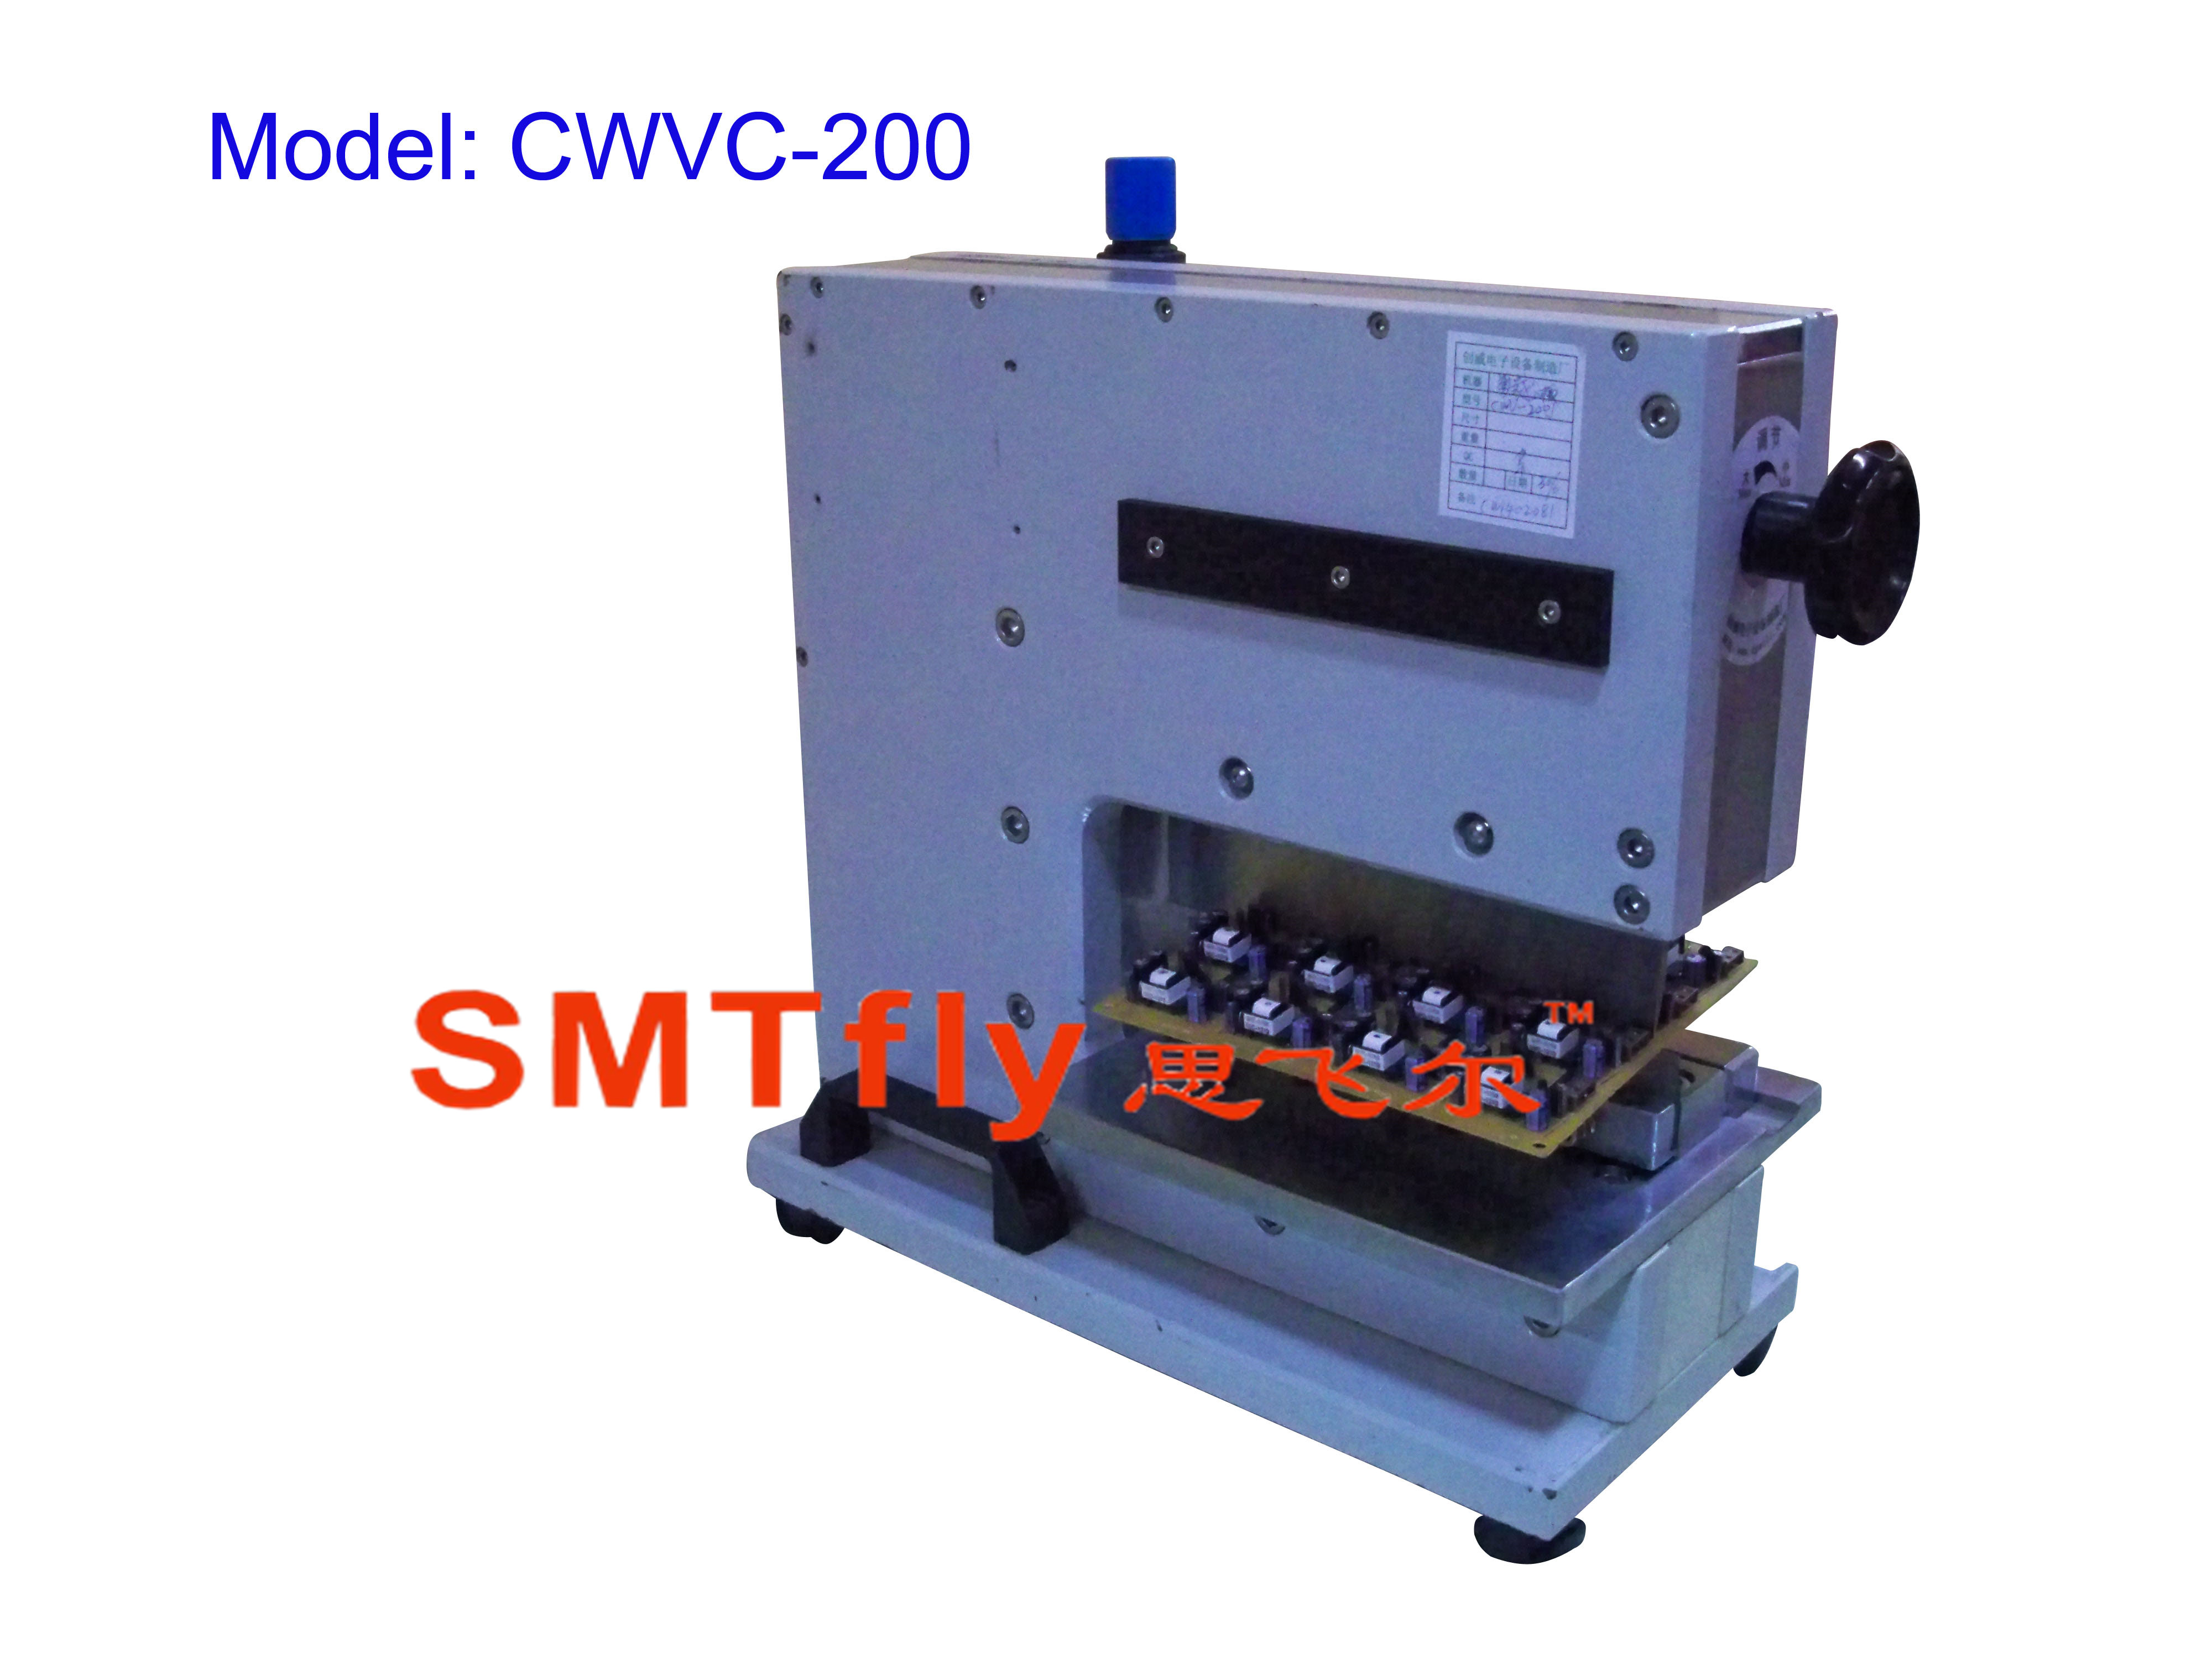 Computer PCB Depanelizer,SMTfly-200J